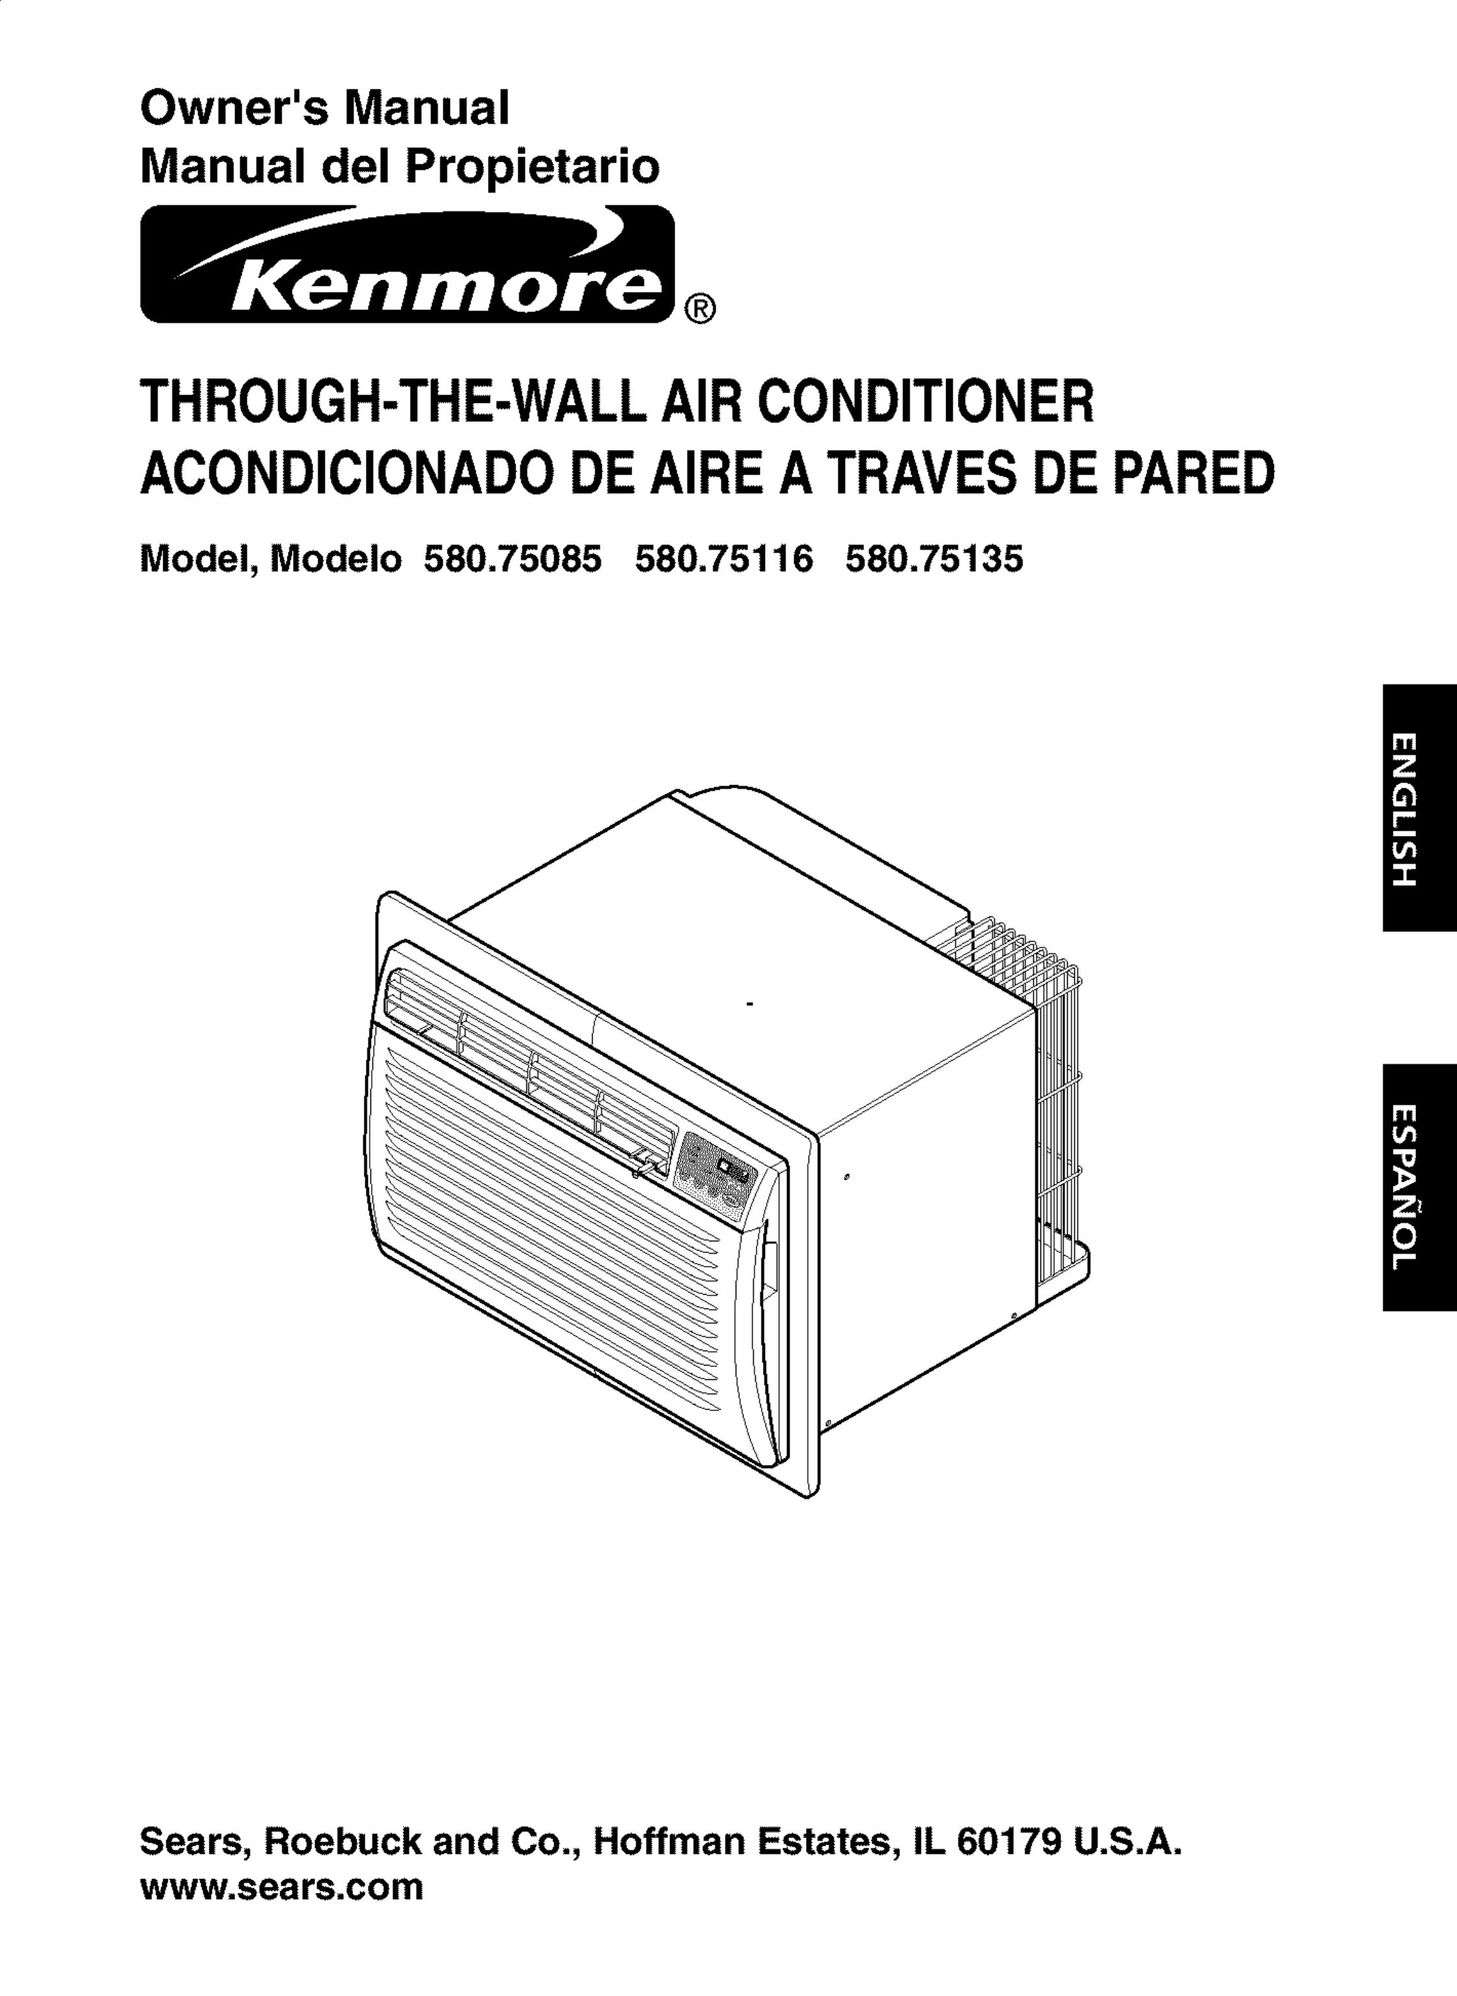 Kenmore 580.75116 Air Conditioner User Manual